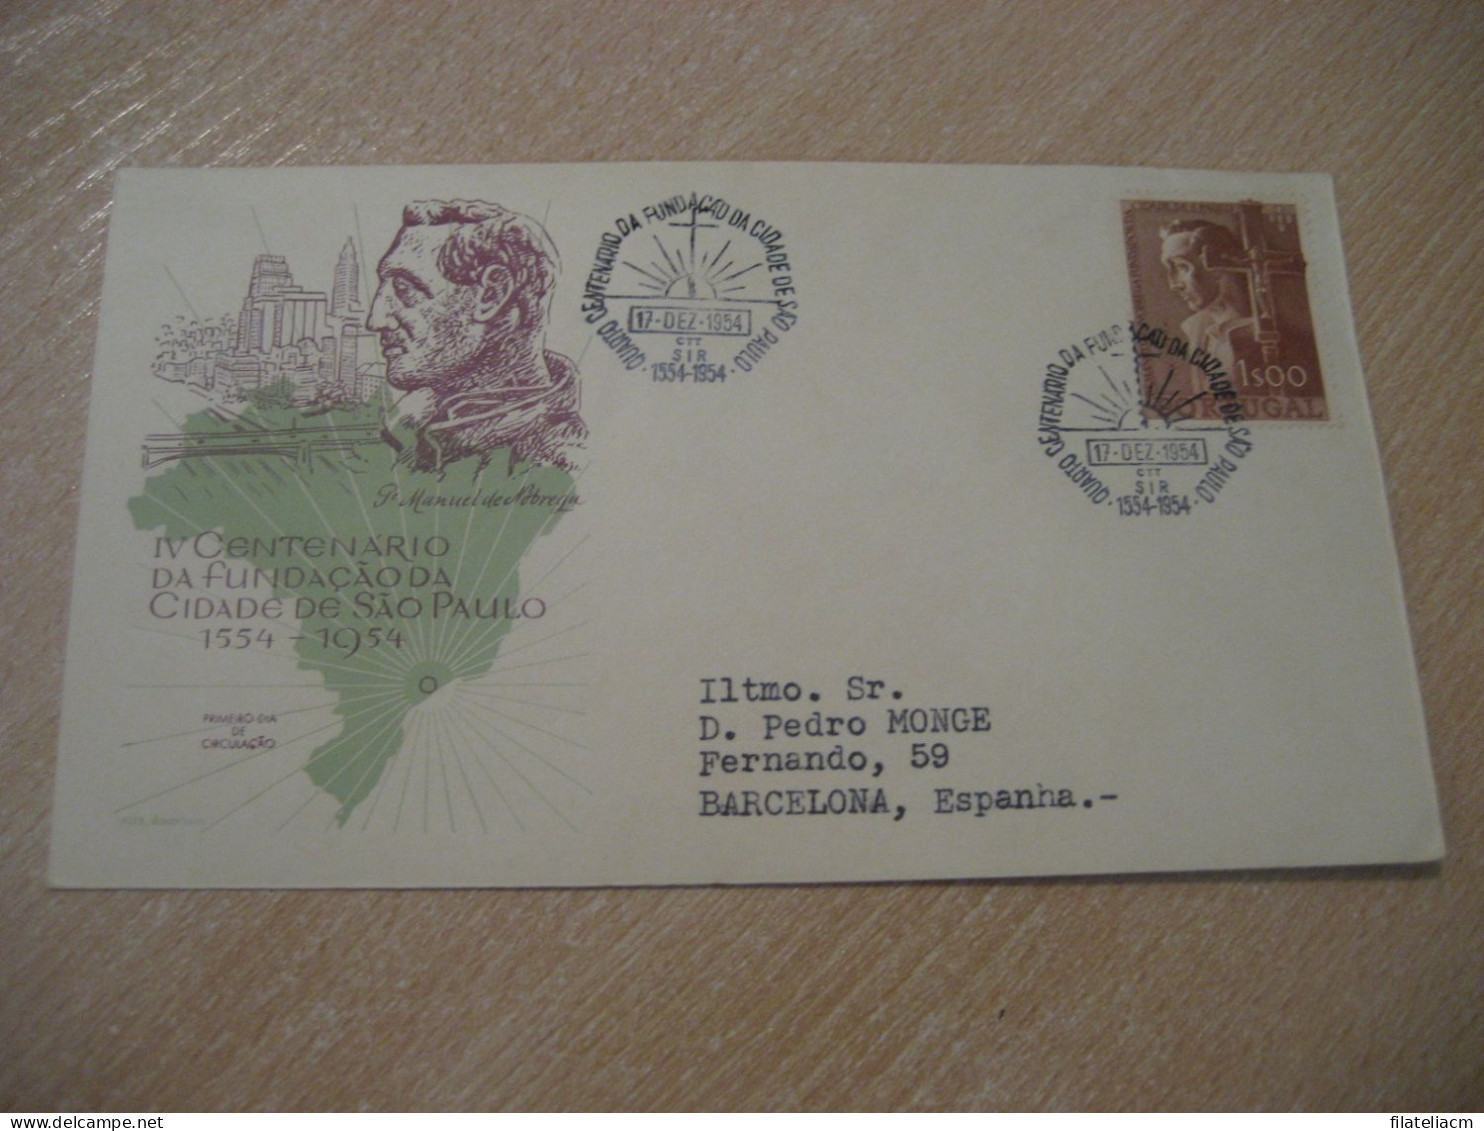 CTT SIR 1954 Manuel De Nobrega Founder SAO PAULO Brasil City FDC Cancel Cover PORTUGAL - Lettres & Documents